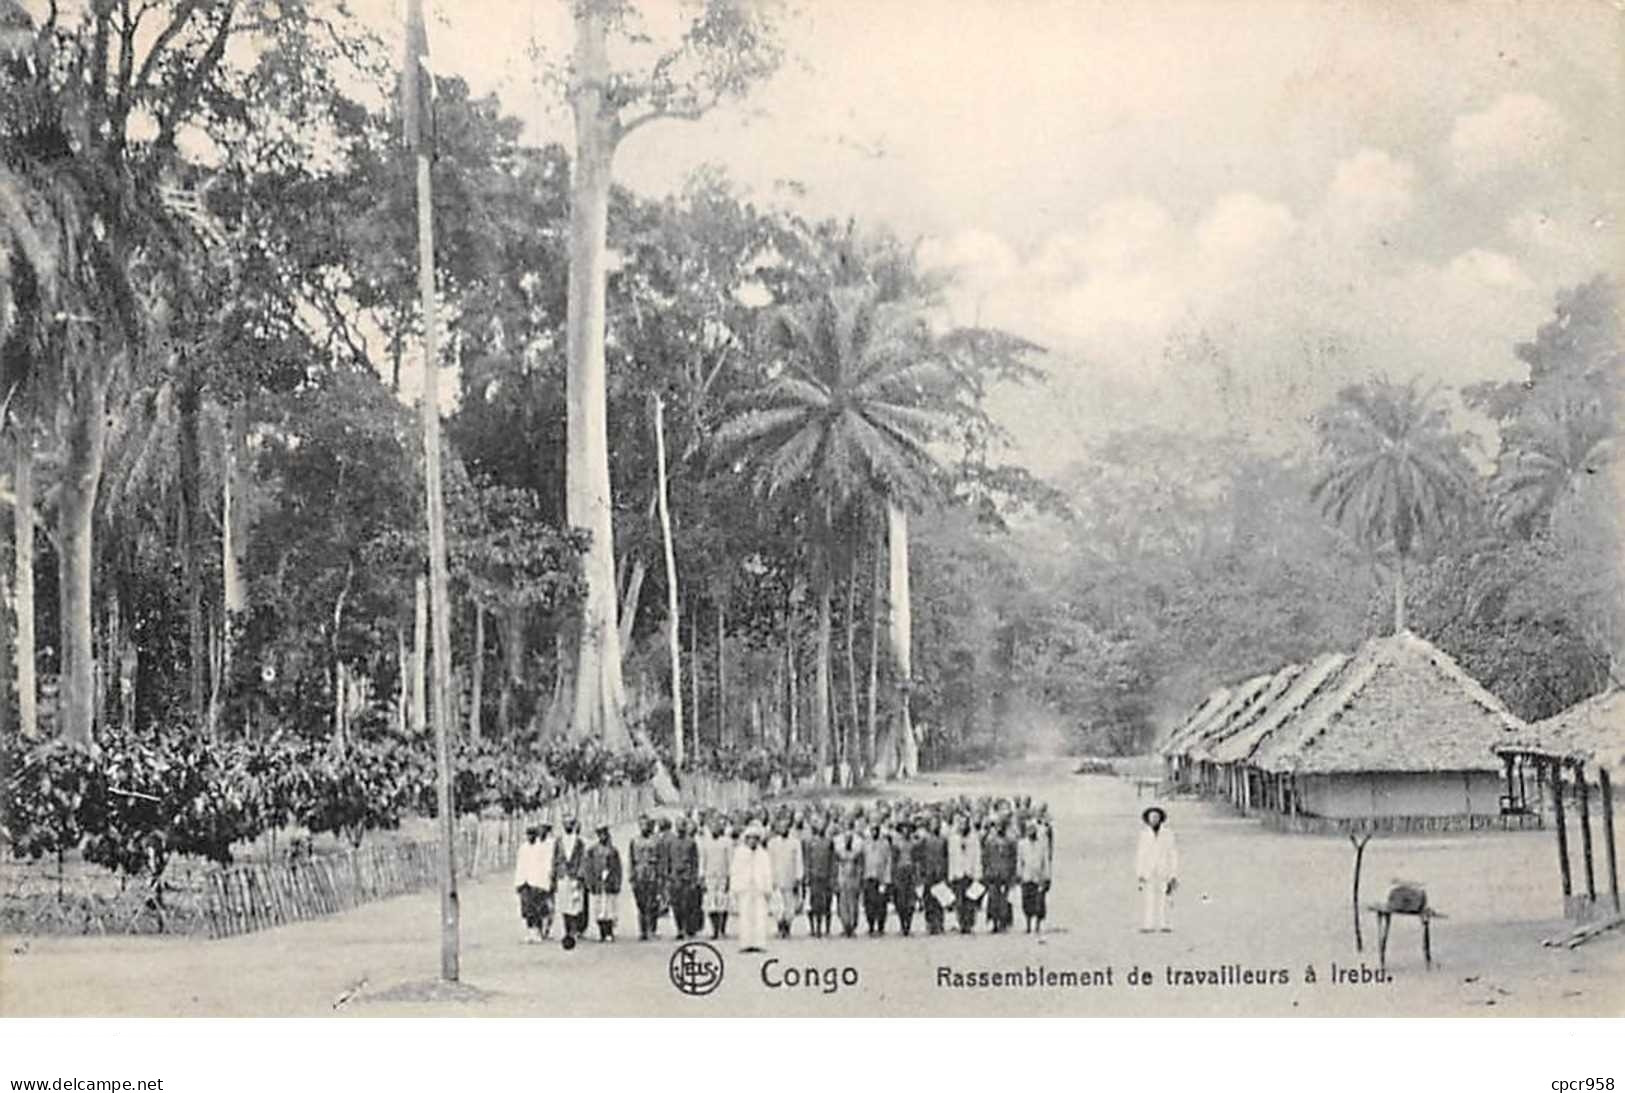 Congo Belge - N°61525 - Rassemblement De Travailleurs ïIrebu - Belgian Congo